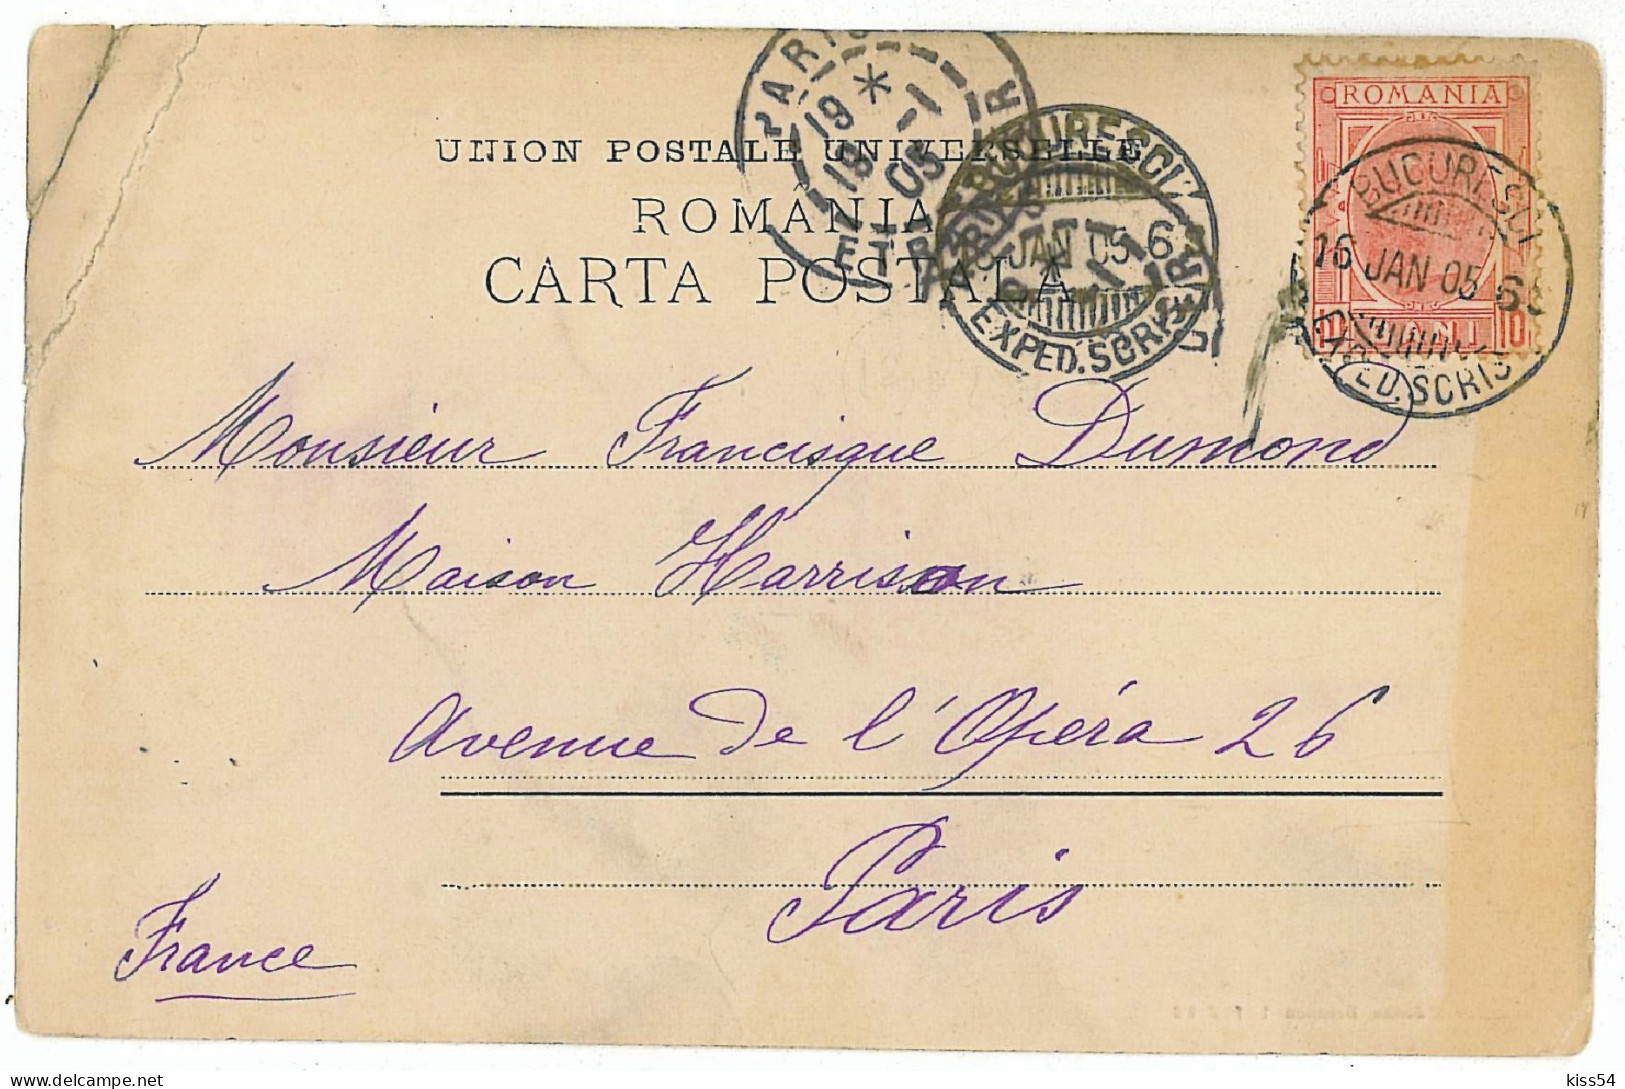 RO 36 - 1322 BUCURESTI, Mitropolia, Interiorul, Romania - Old Postcard - Used - 1905 - Romania